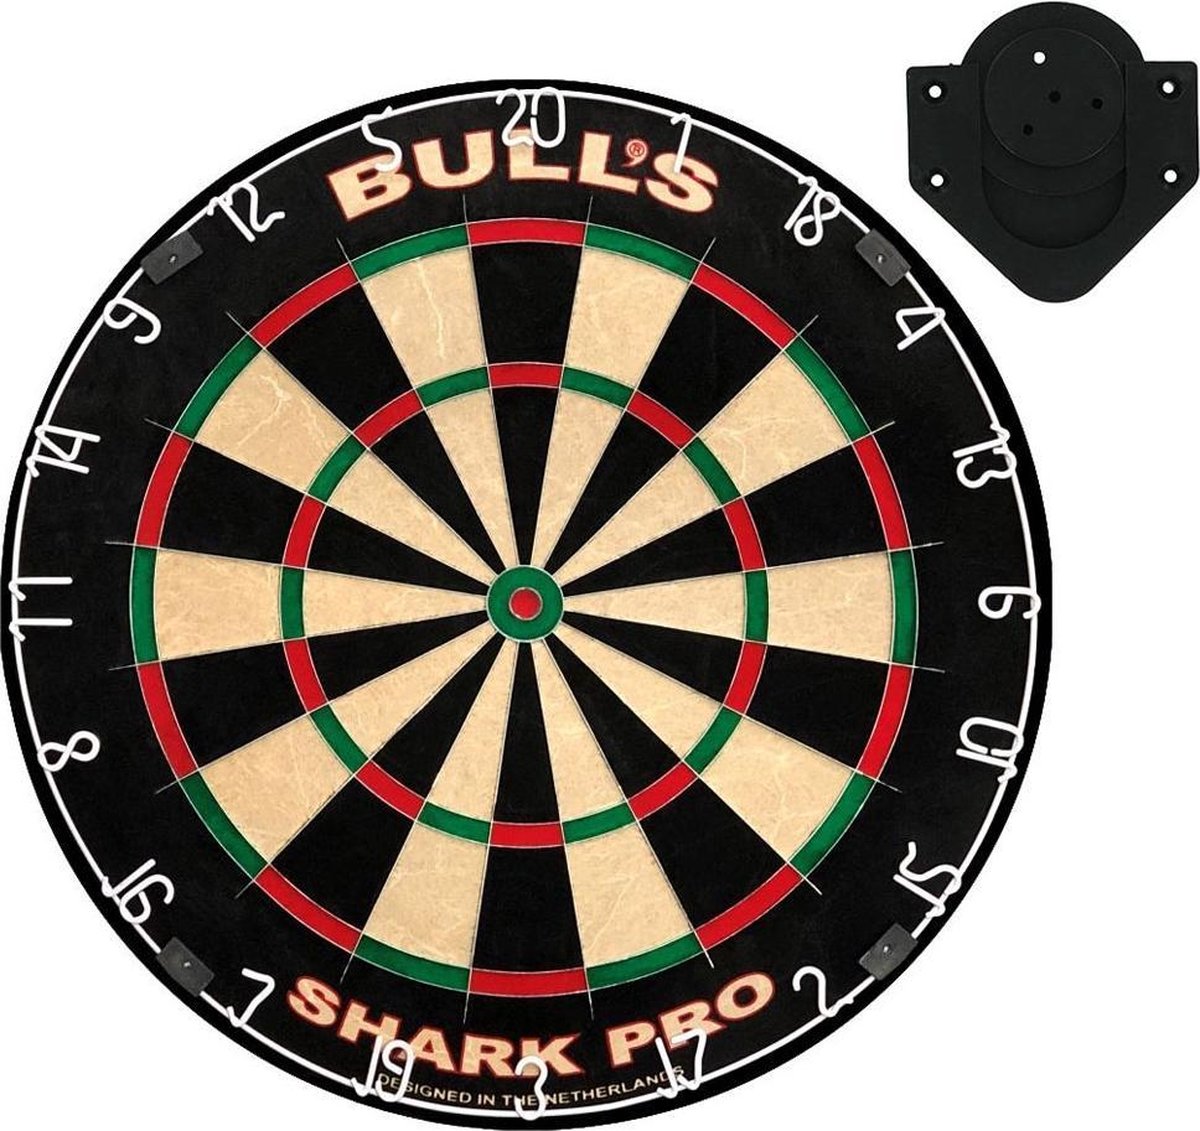 Bull's Shark Pro - Dartboard